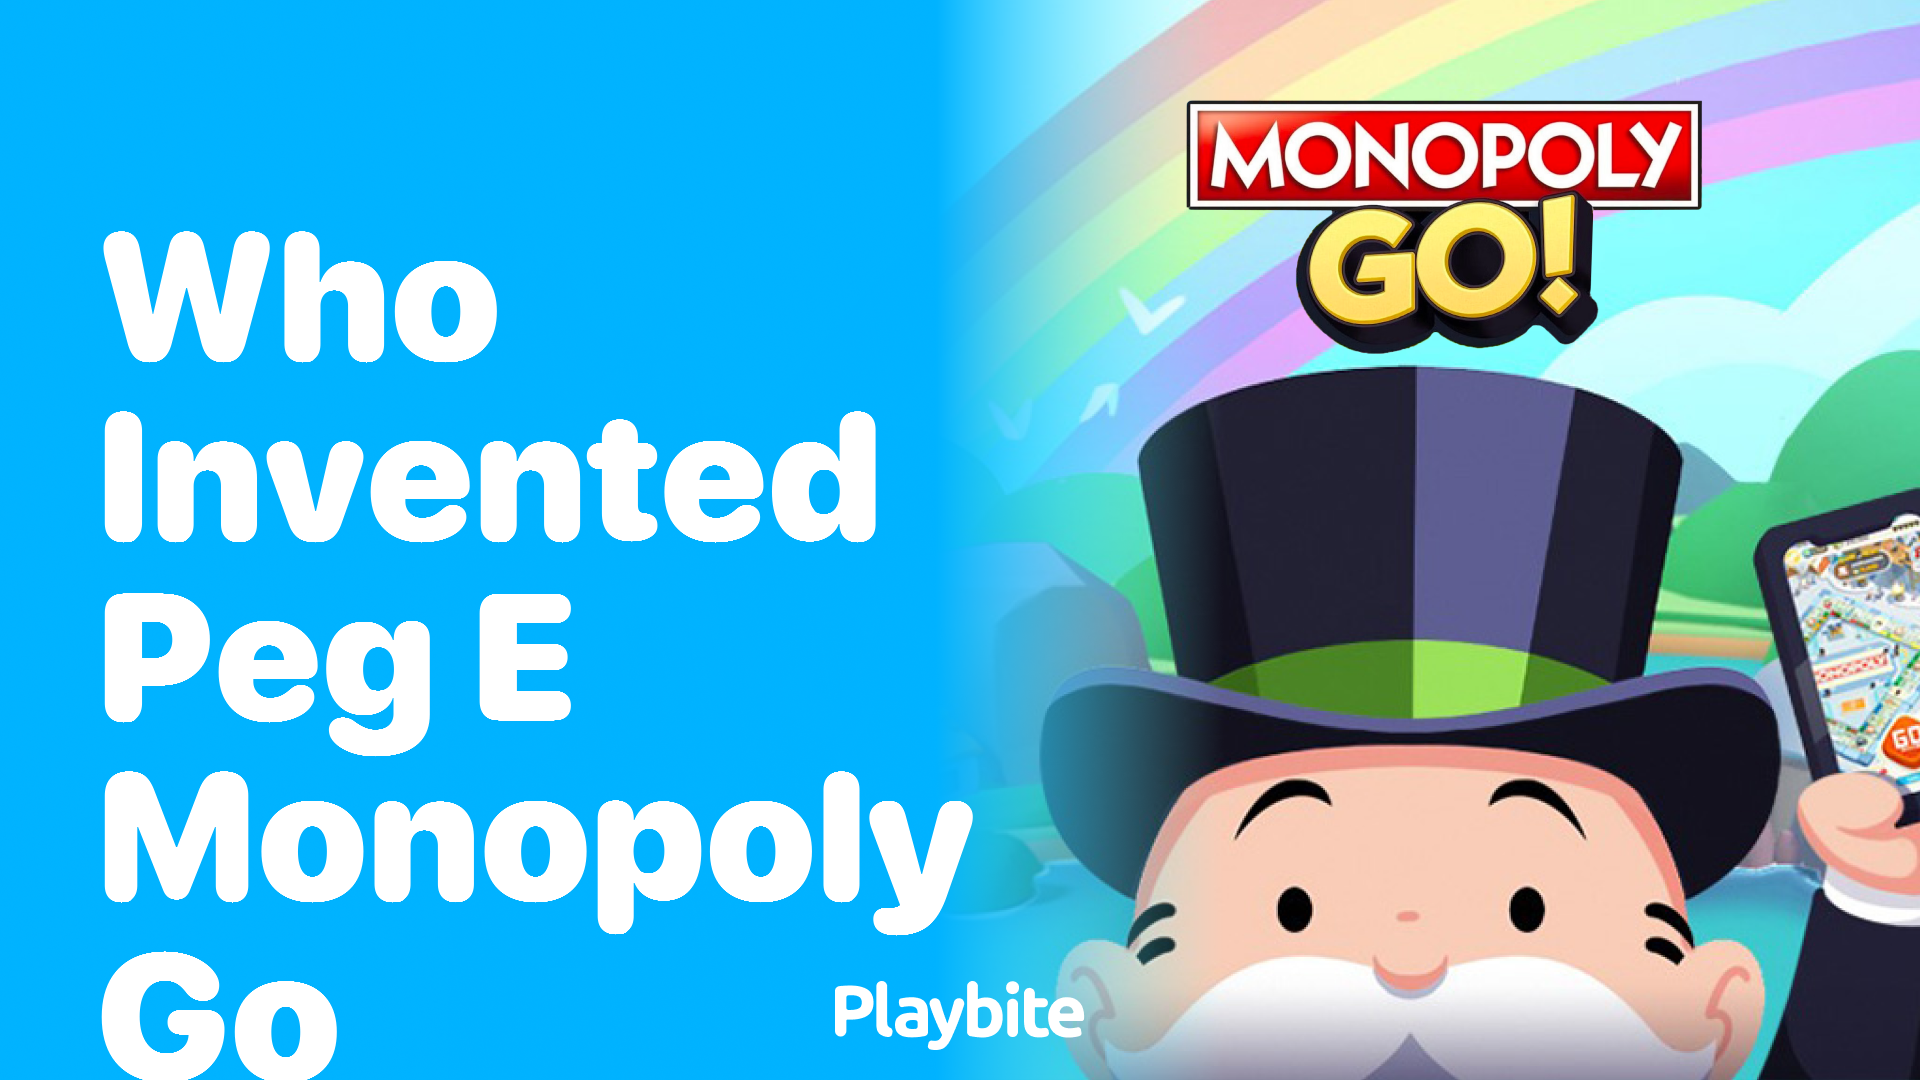 Who Invented Peg E Monopoly Go?